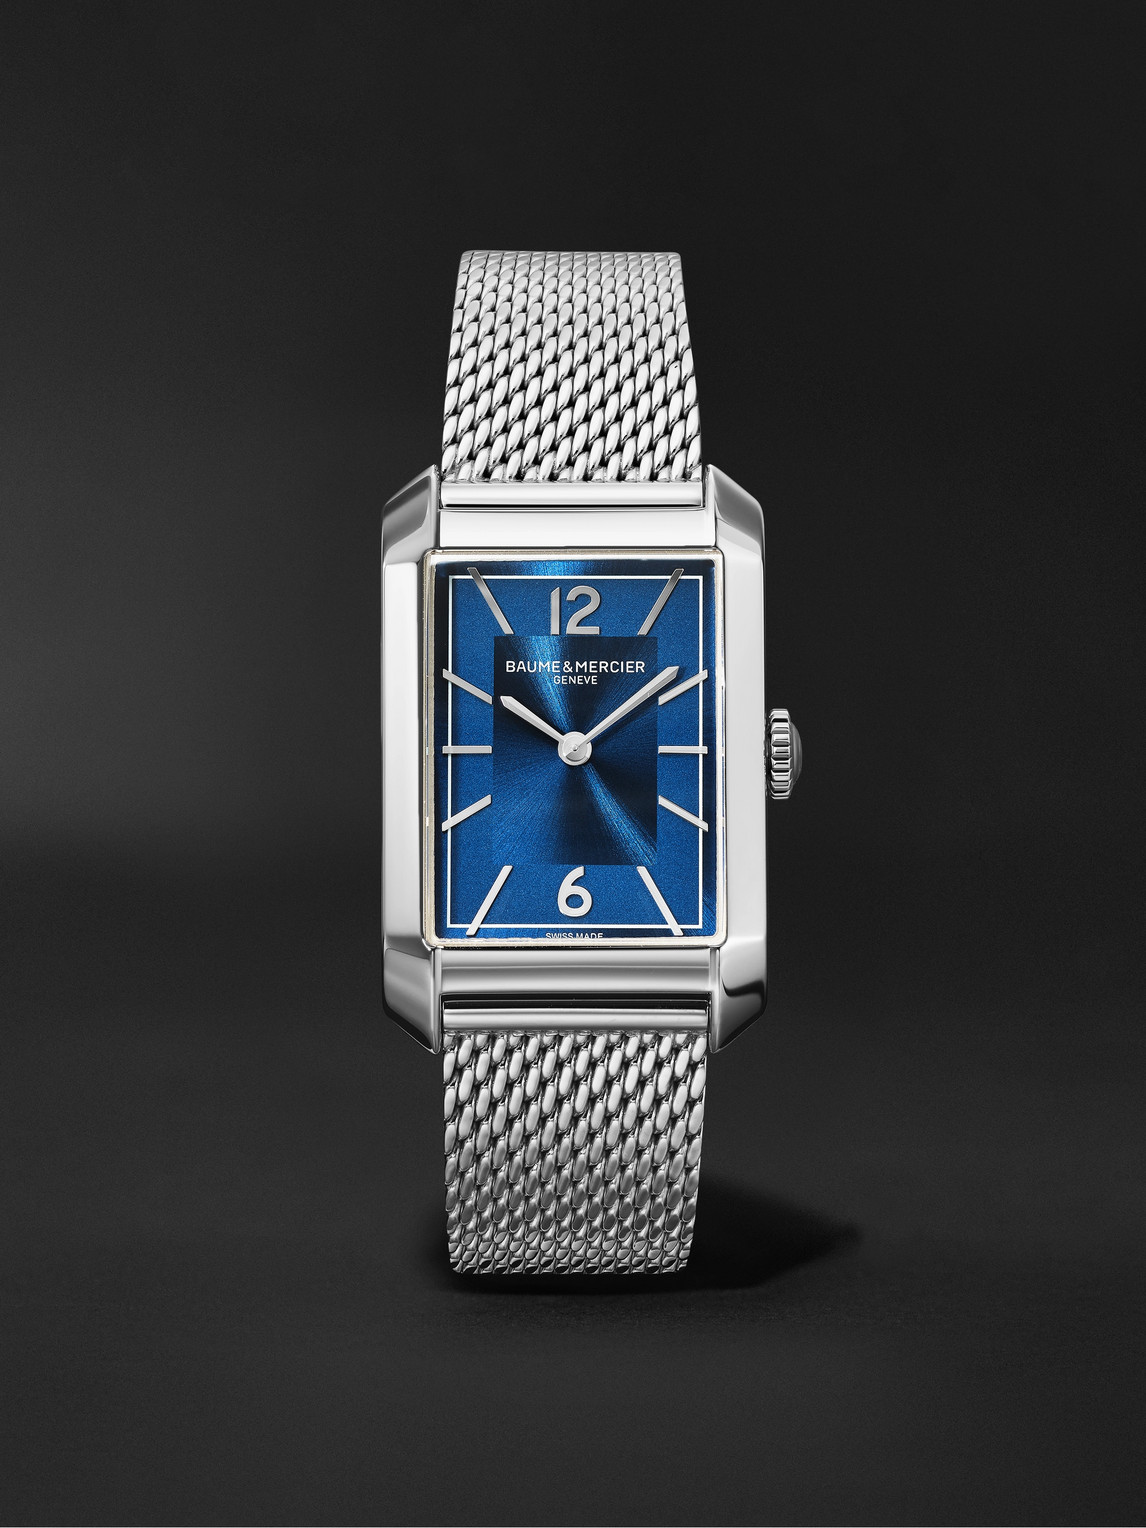 Baume & Mercier Hampton 27.5mm Stainless Steel Watch, Ref. No. M0a10671 In Blue